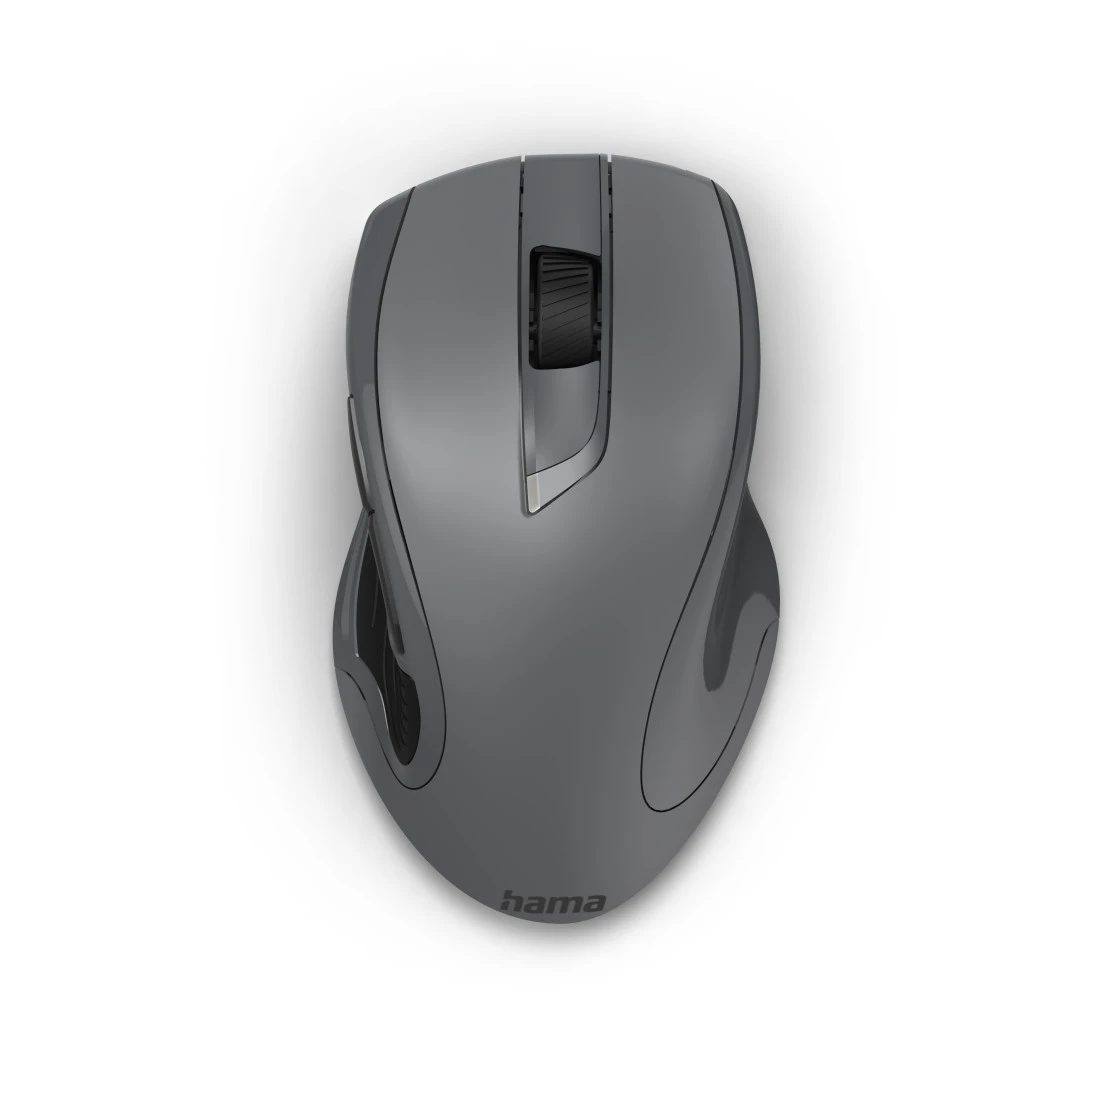 Hama 00173016 MW-900 V2 7-Button Laser Wireless Mouse, dark grey